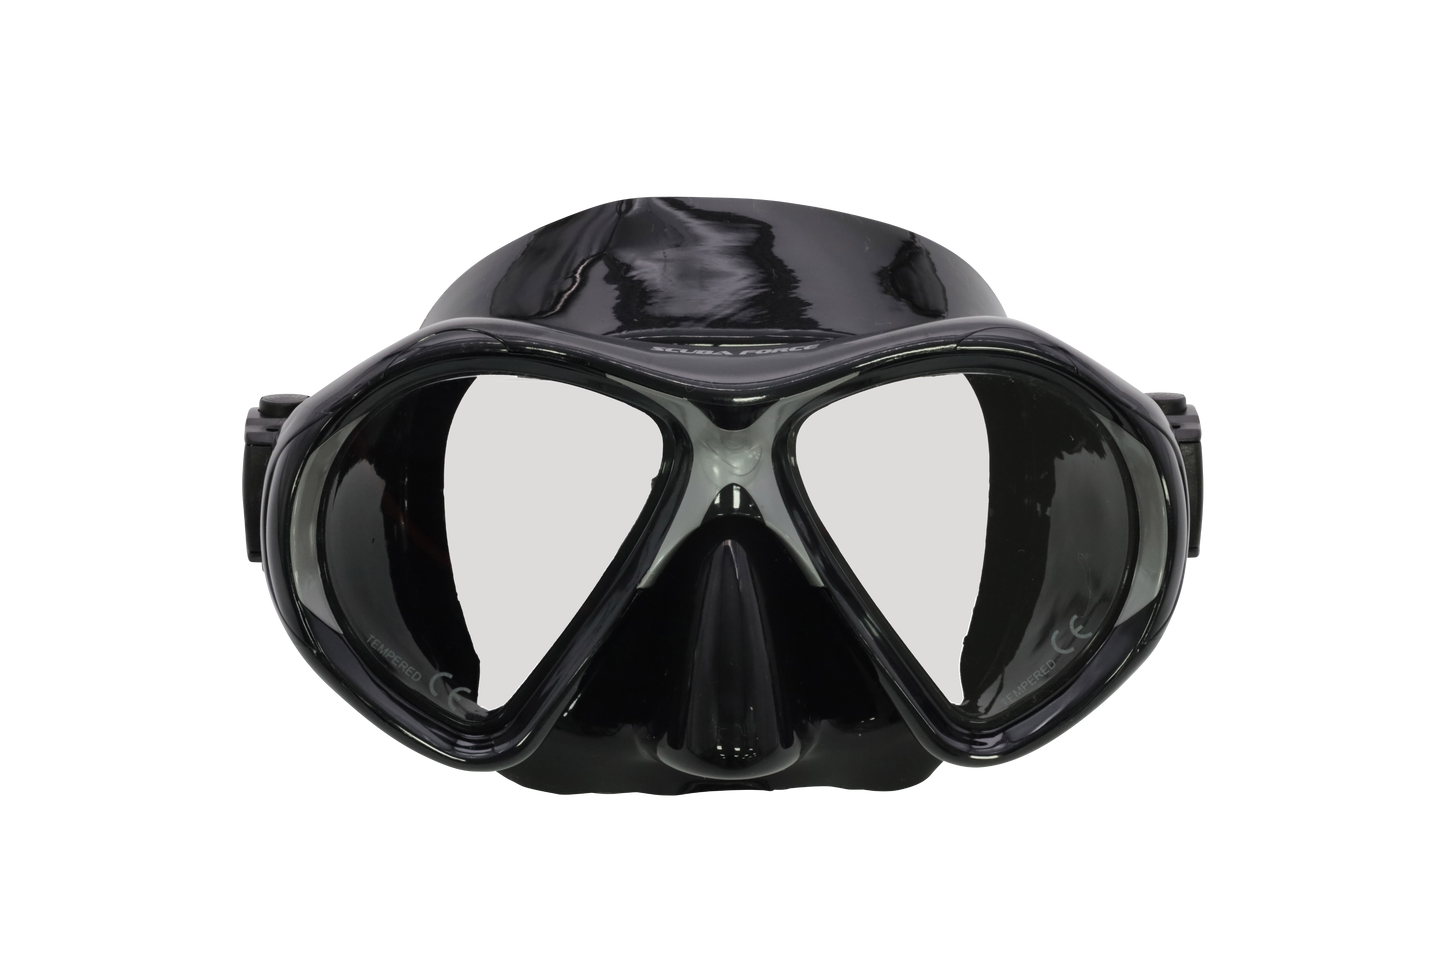 Vision II Mask